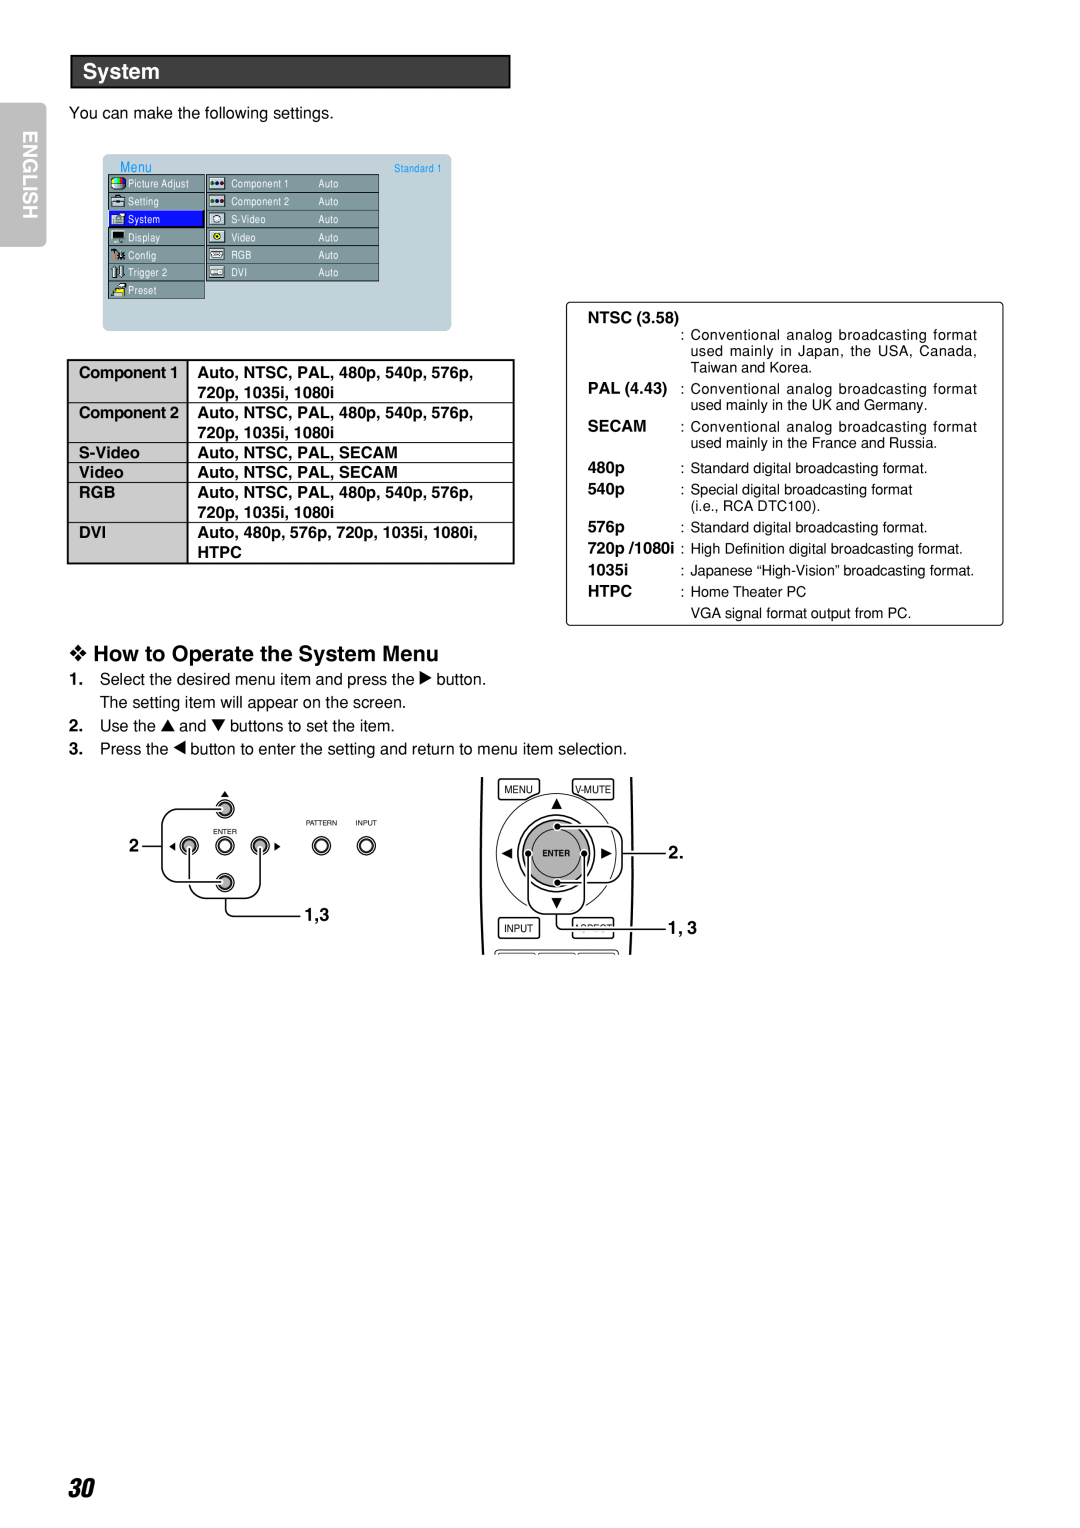 Marantz Model VP-10S1 manual How to Operate the System Menu, English 